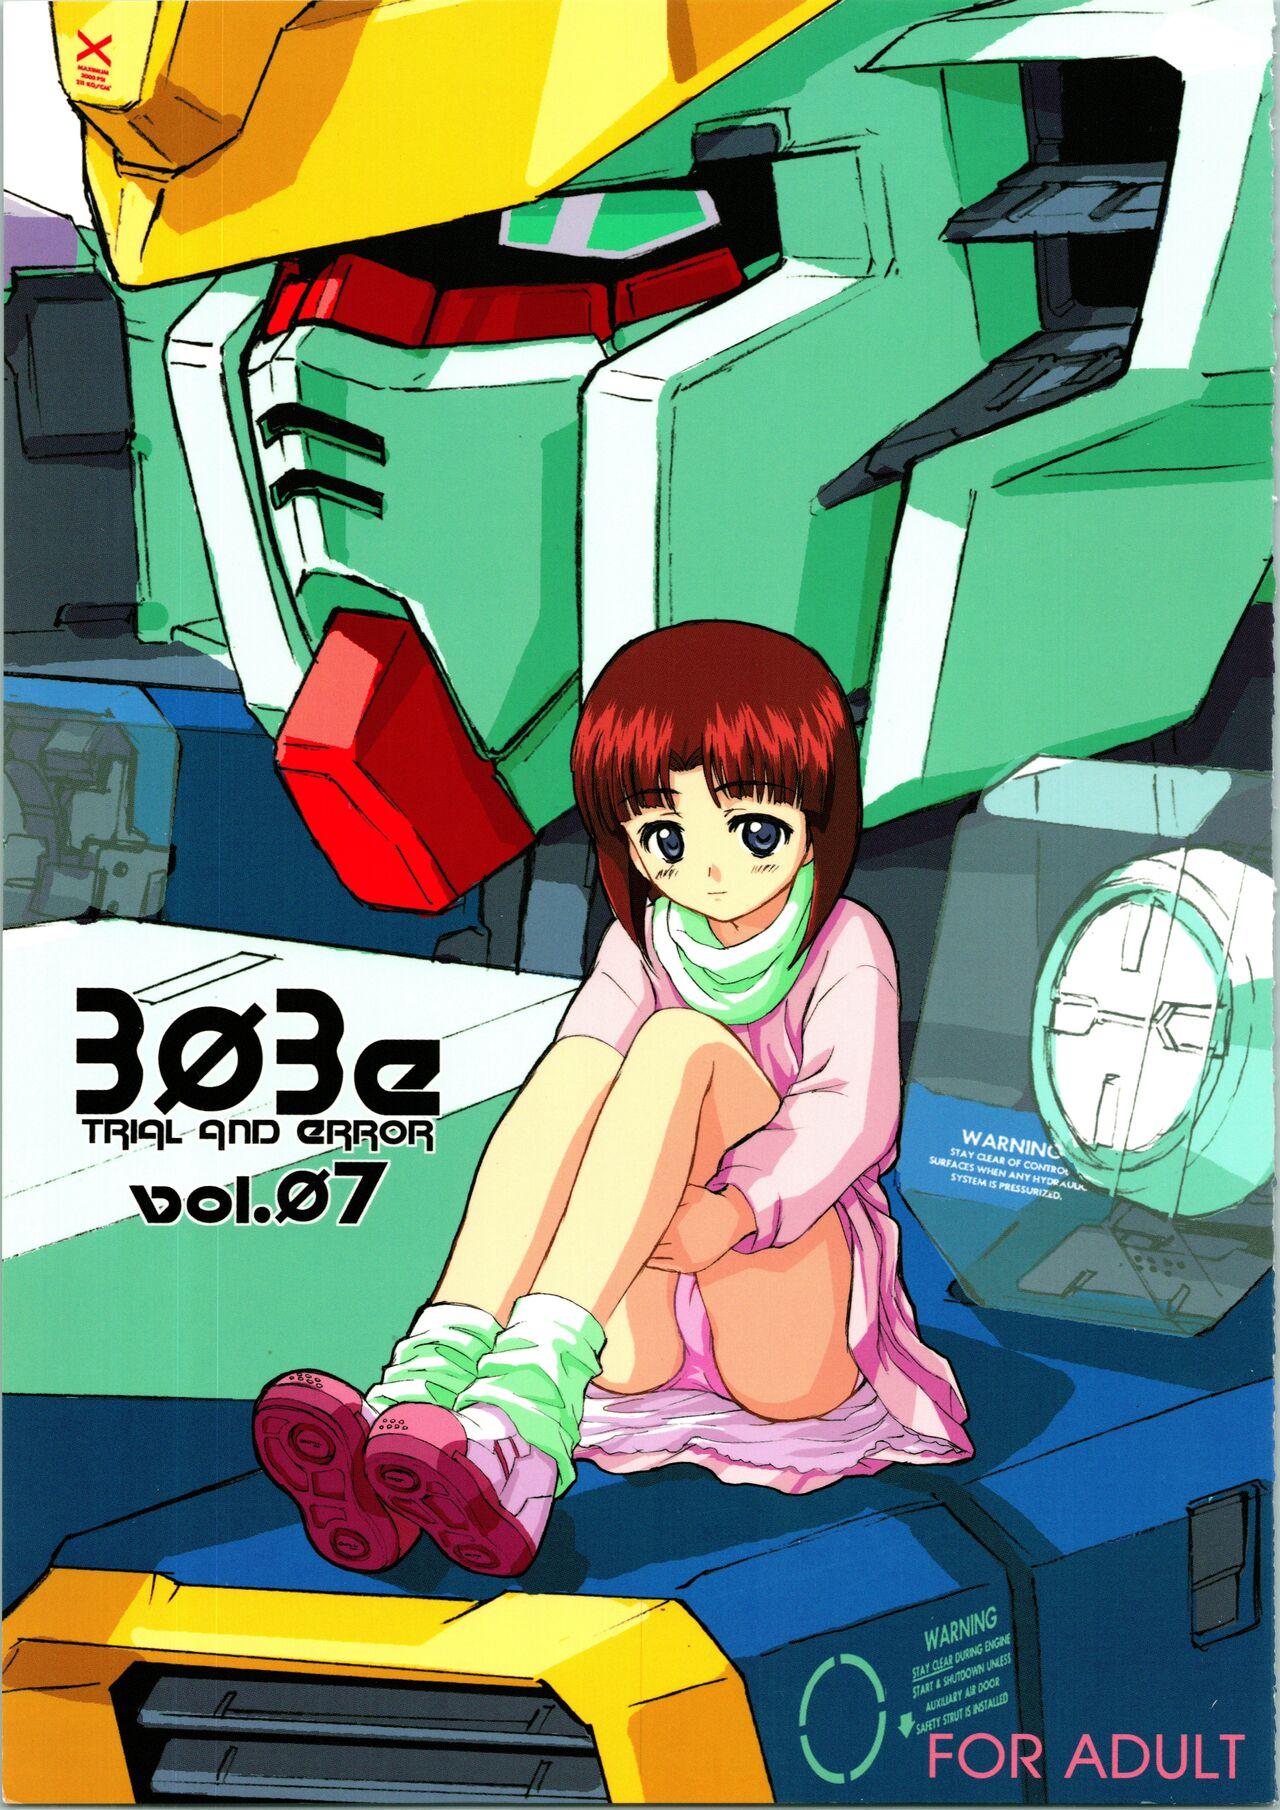 [WINDFALL (Aburaage)] 303e Vol. 07 (Gundam X, R.O.D the TV) ZHOA8229 0